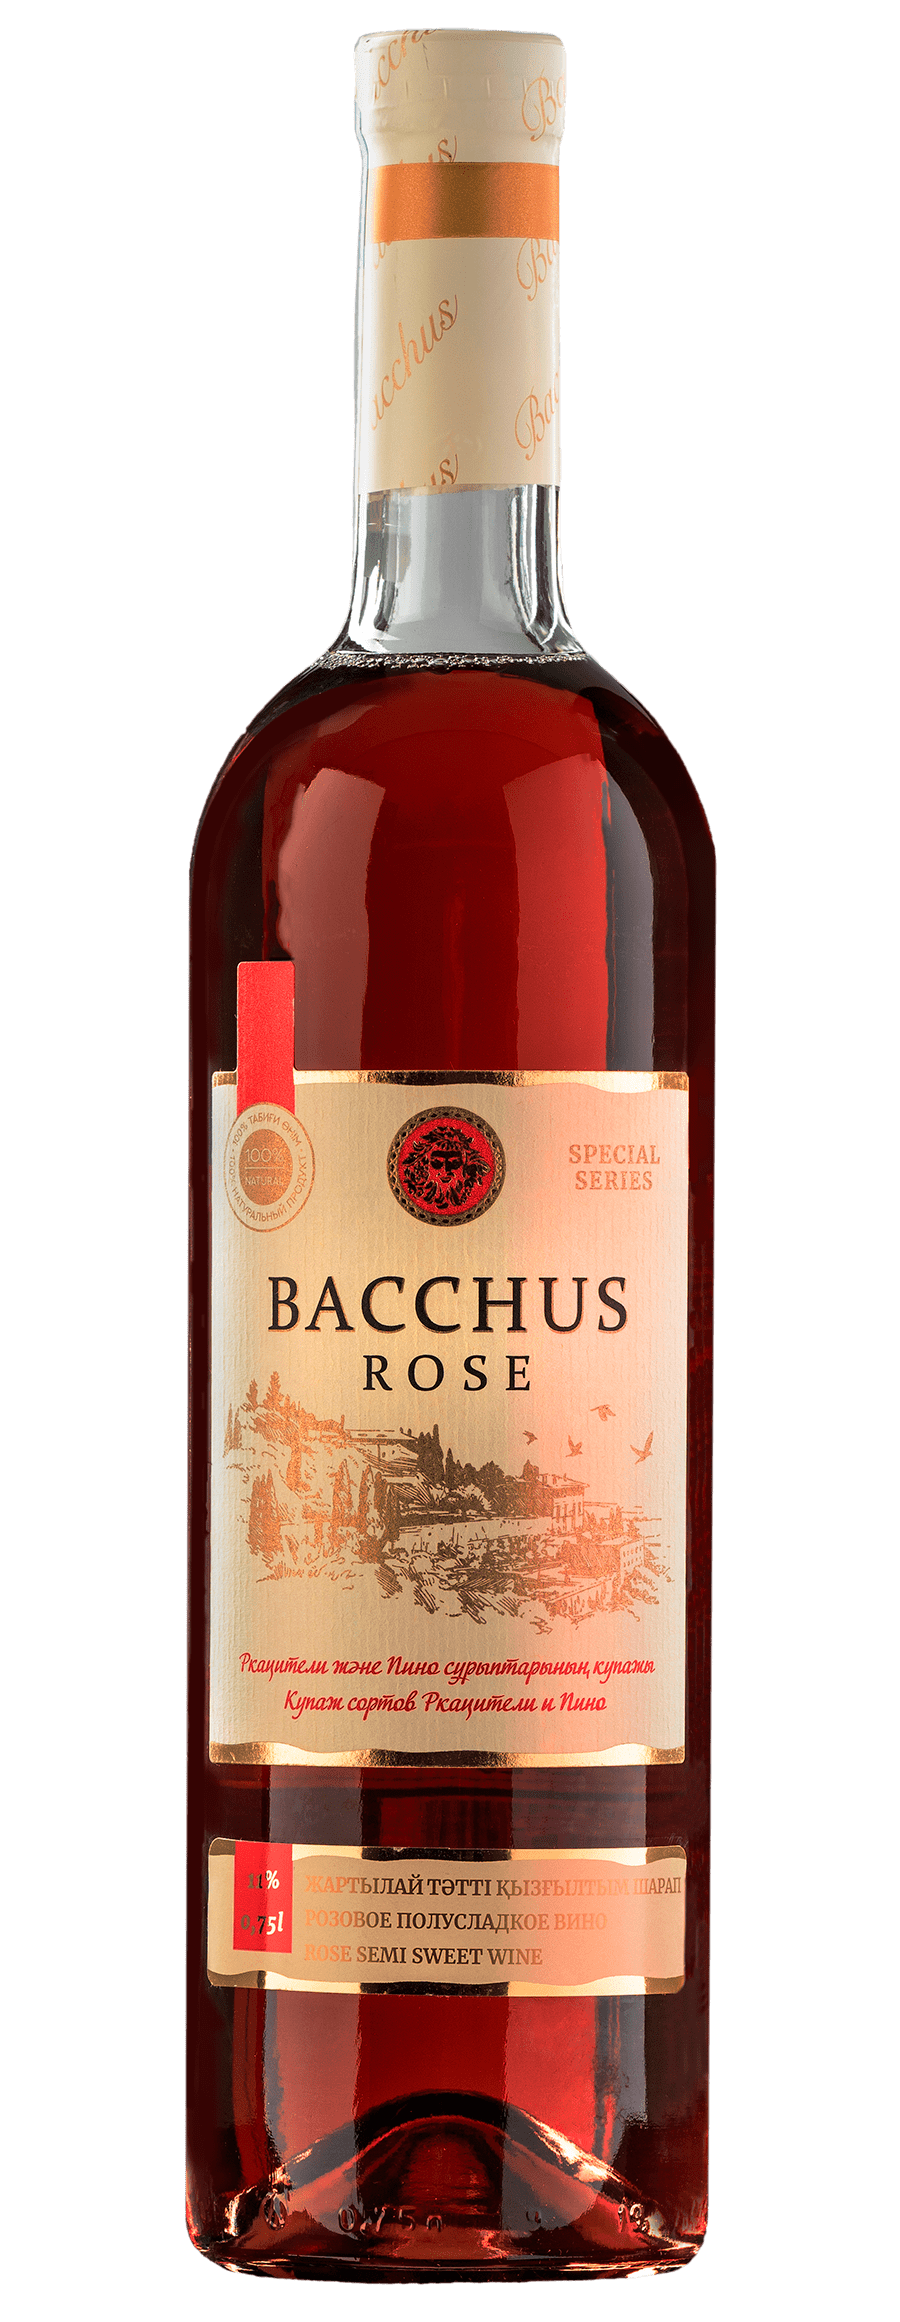 Bacchus rose 